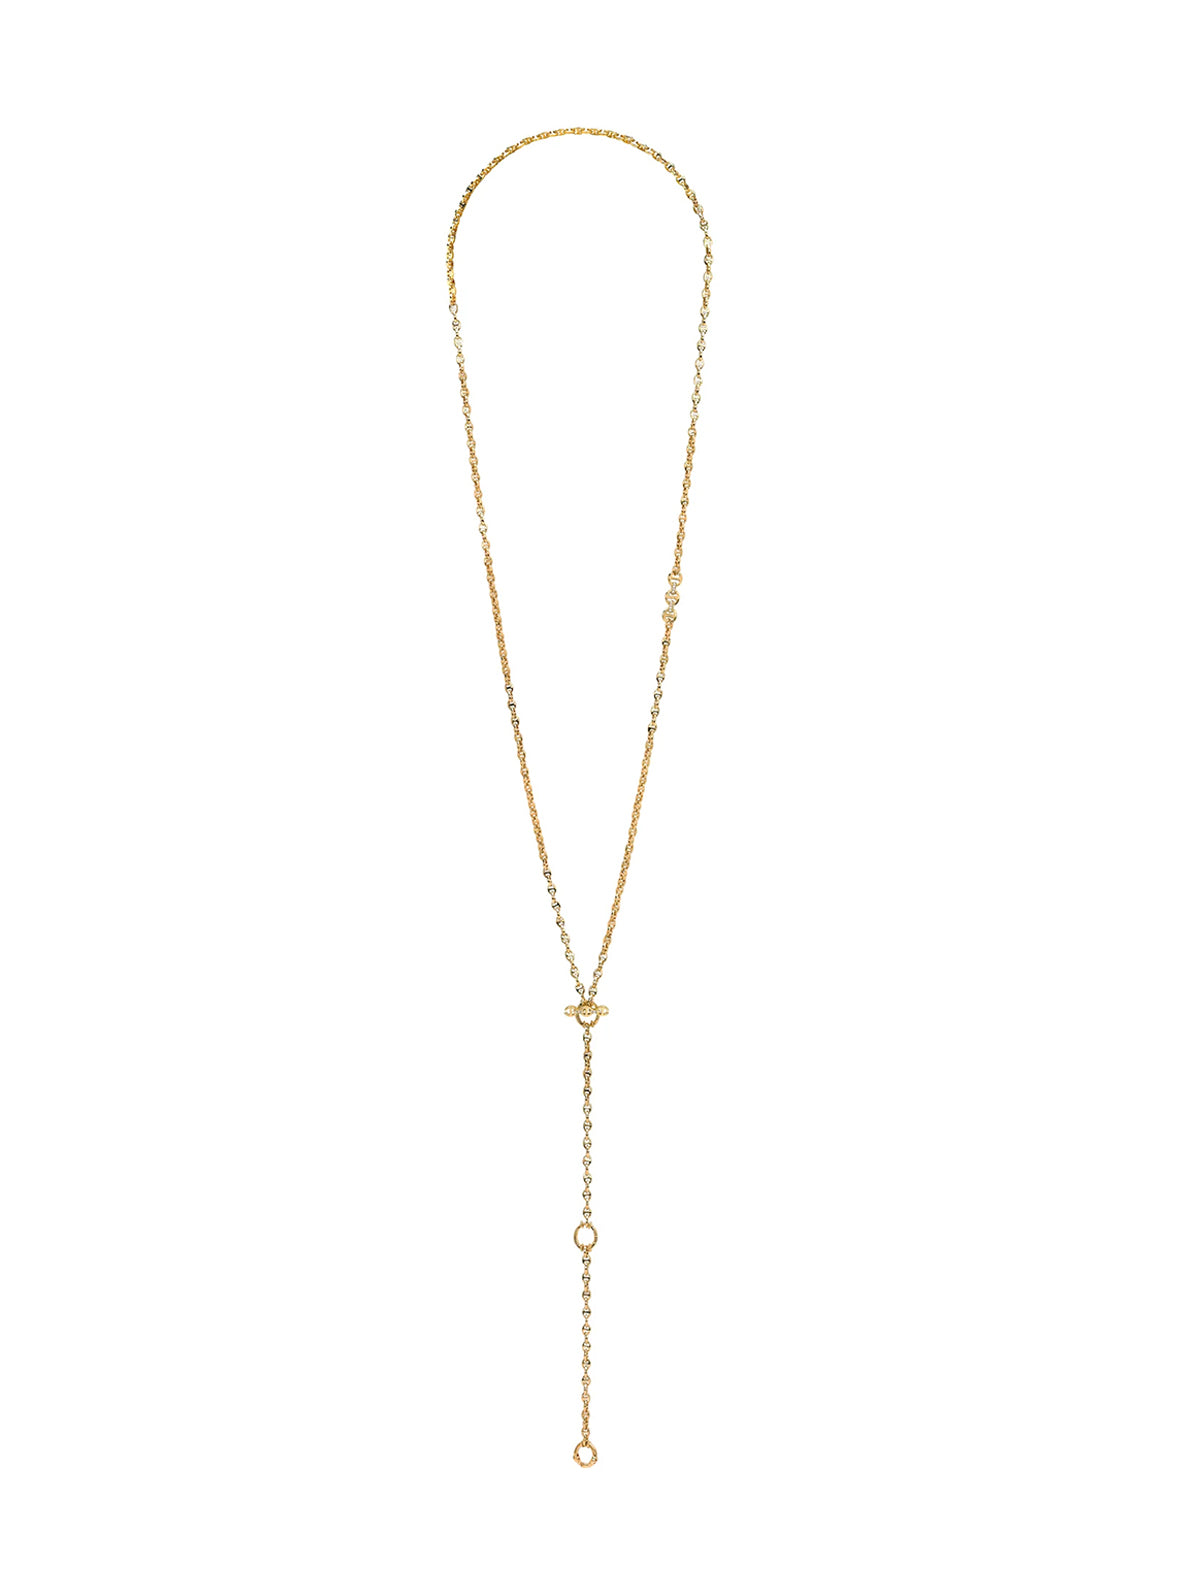 HOORSENBUHS 3mm Open-Link™ Necklace 18k Yellow Gold